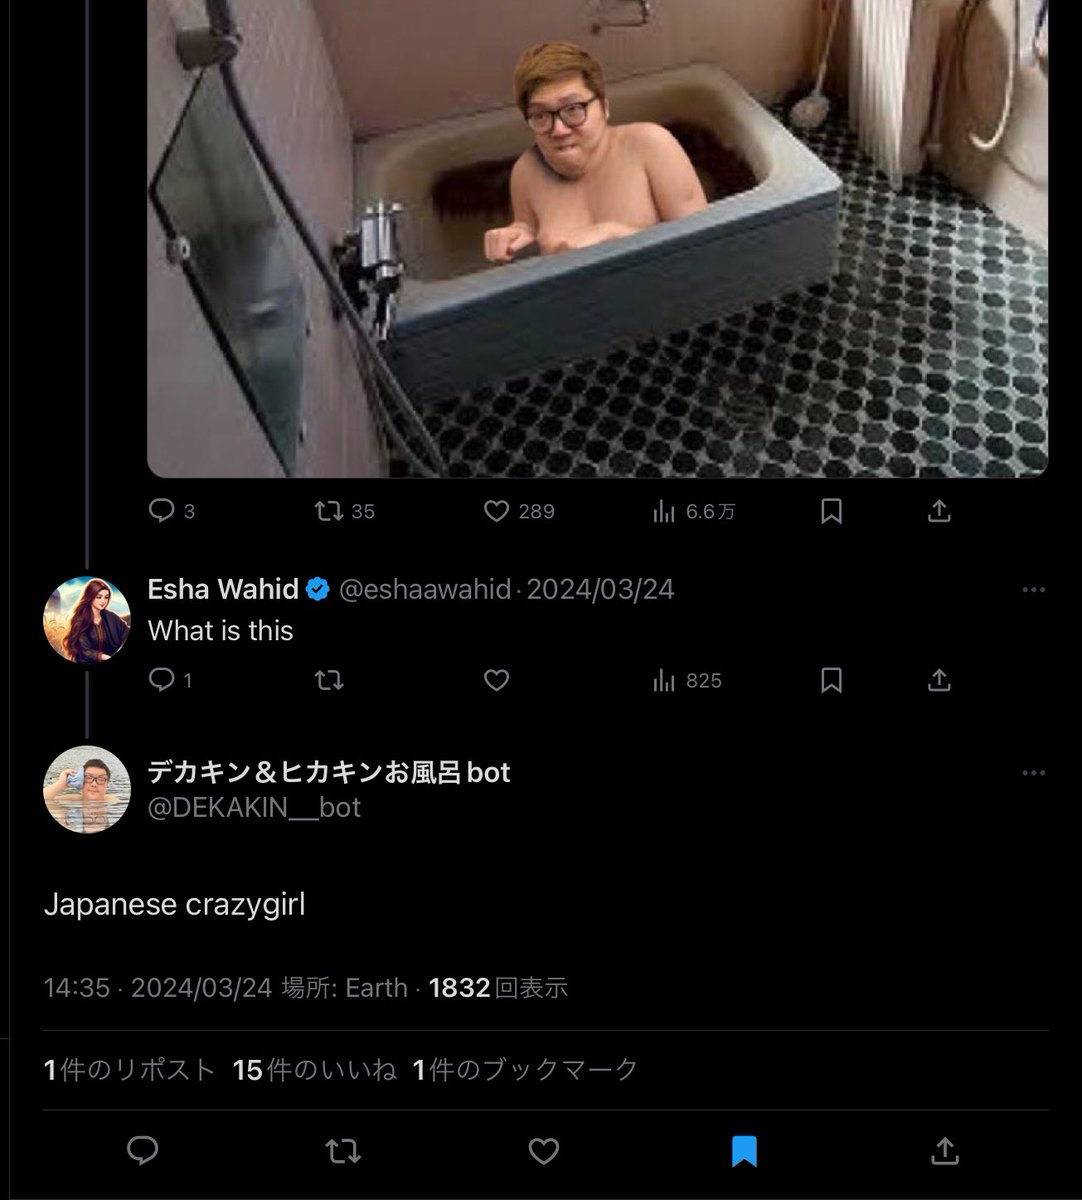 Japanese crazygirl

〜デカキン&ヒカキンお風呂bot〜